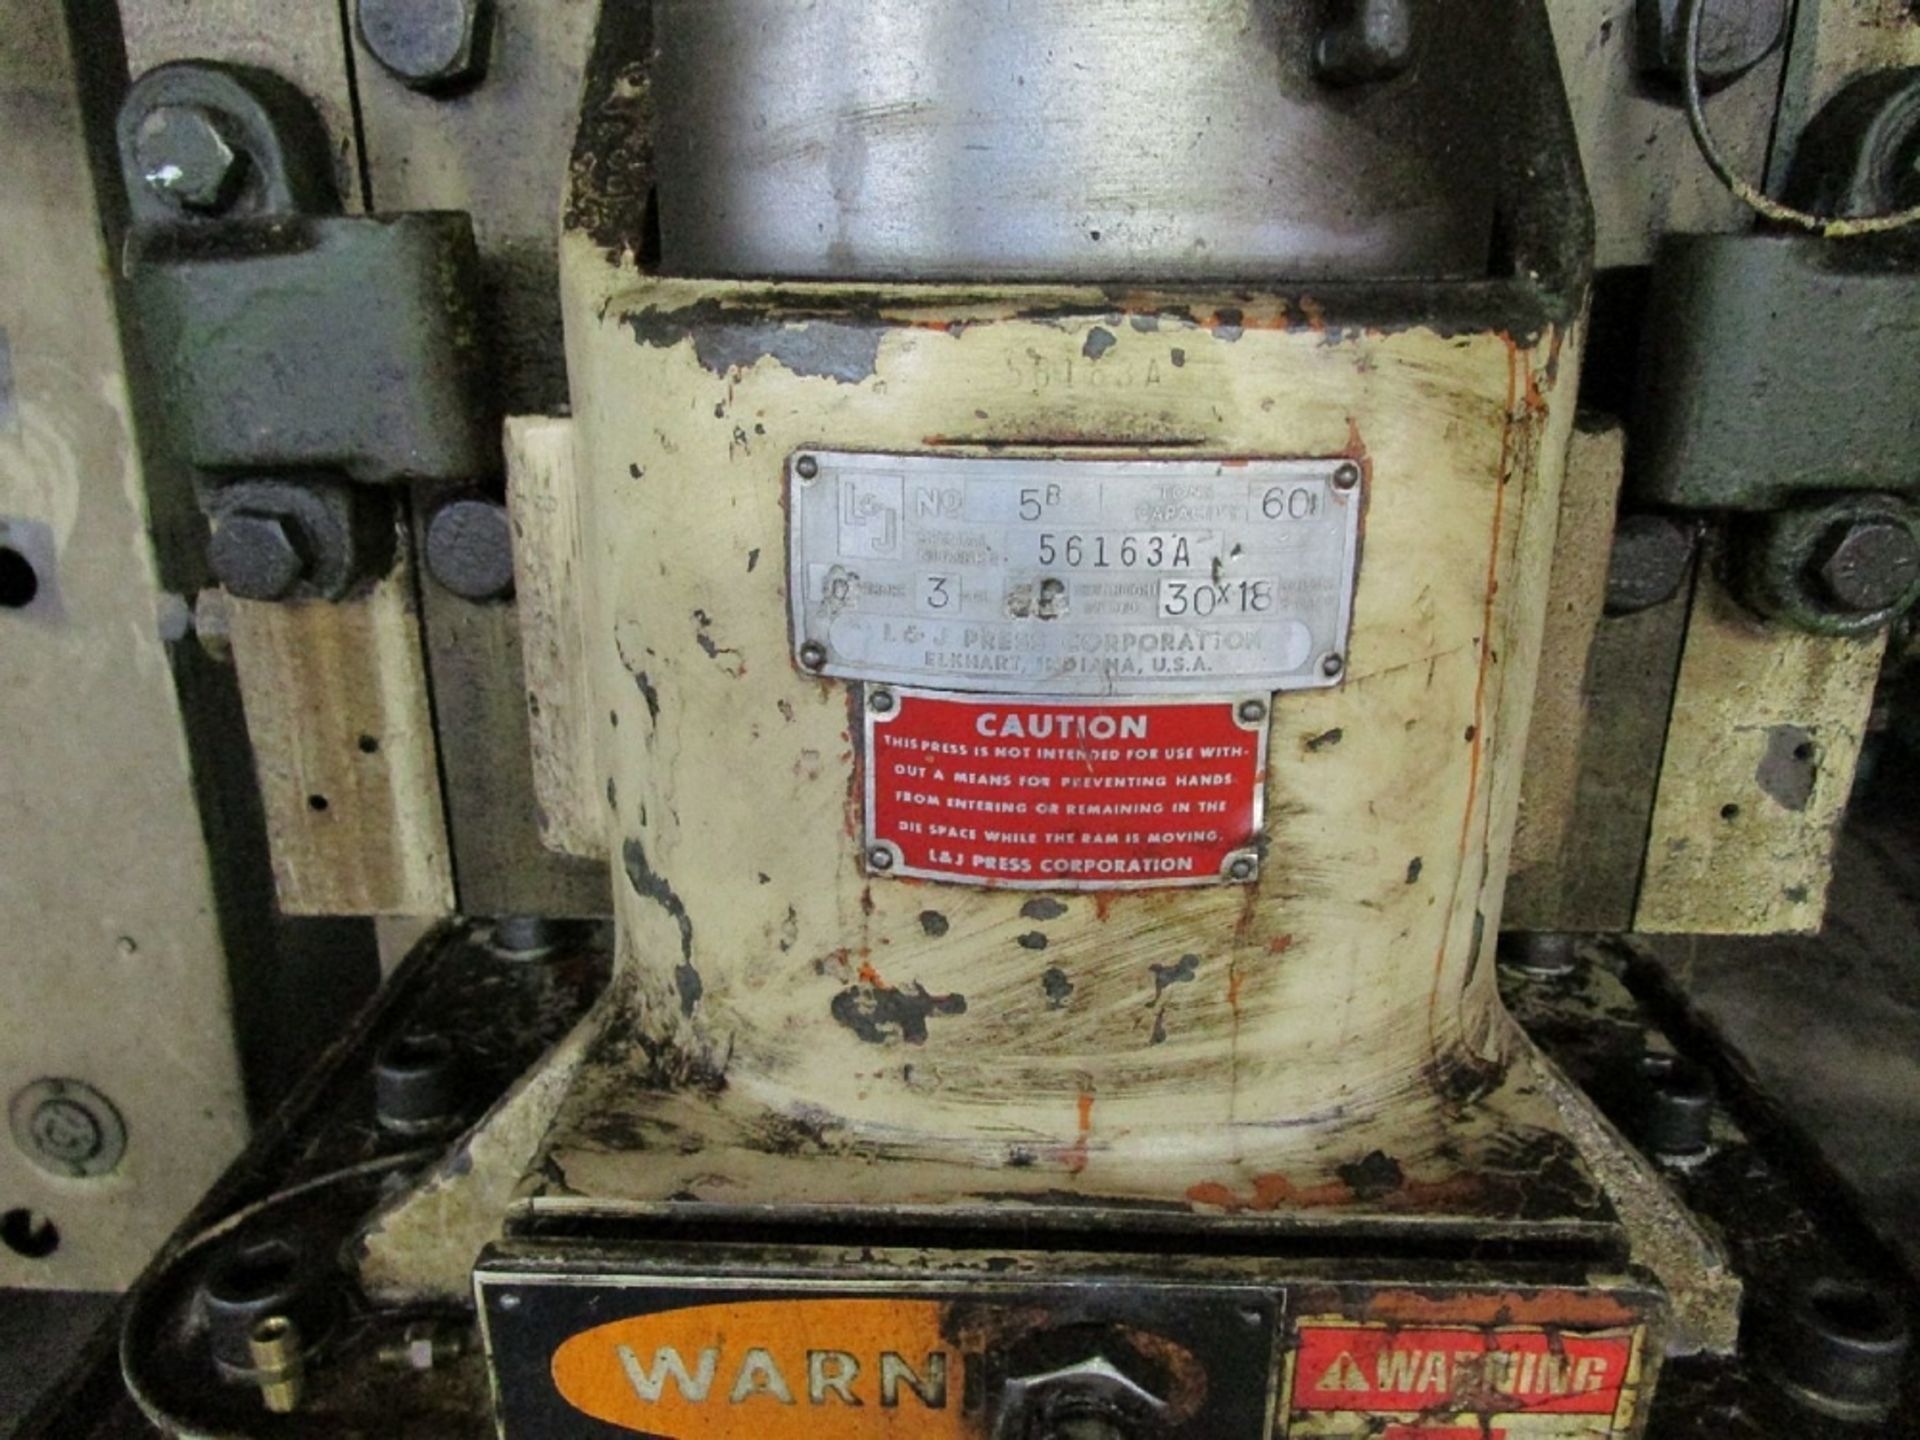 L&J Model 5B 60 Ton Press - Image 2 of 2